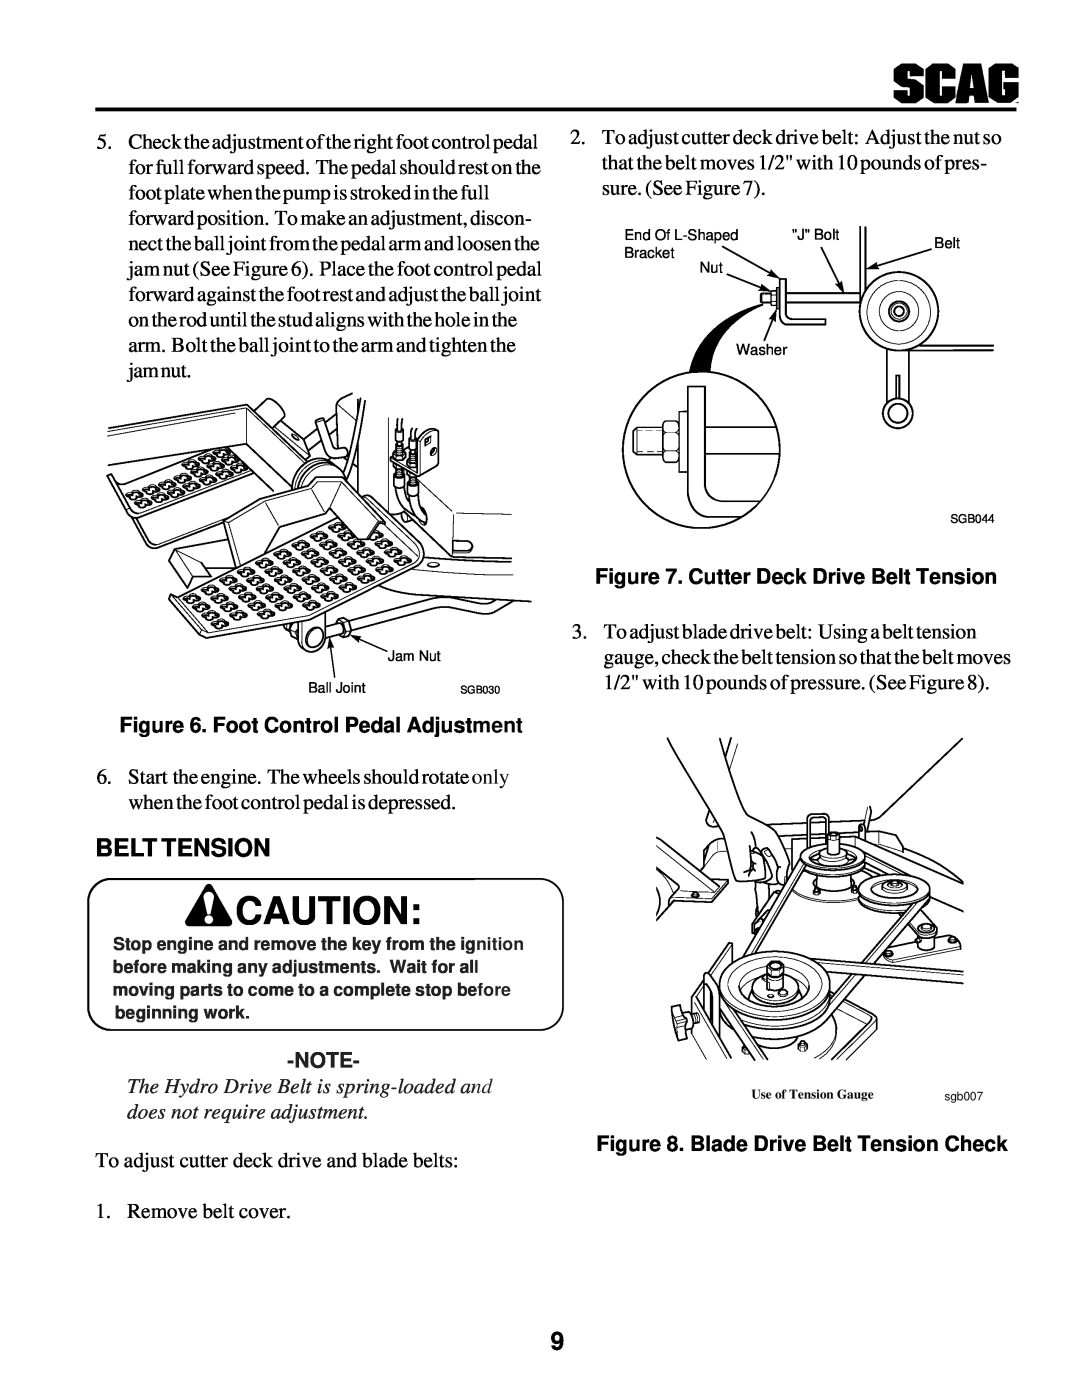 Scag Power Equipment STHM manual Foot Control Pedal Adjustment, Cutter Deck Drive Belt Tension 